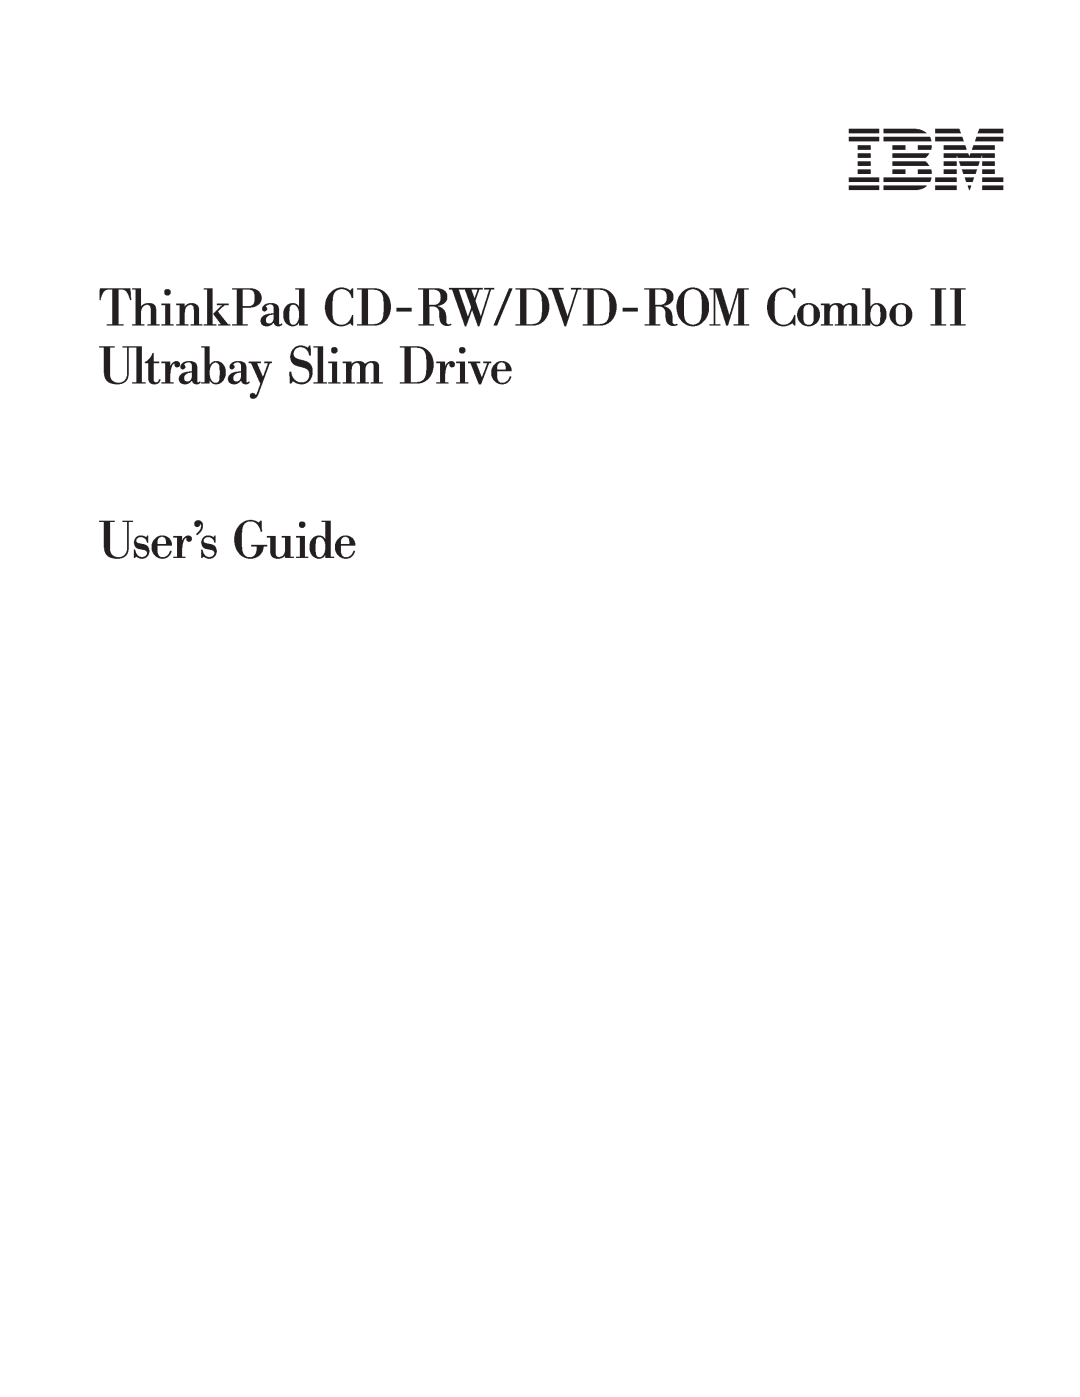 IBM 73P3292 manual ThinkPad CD-RW/DVD-ROM Combo II Ultrabay Slim Drive User’s Guide 